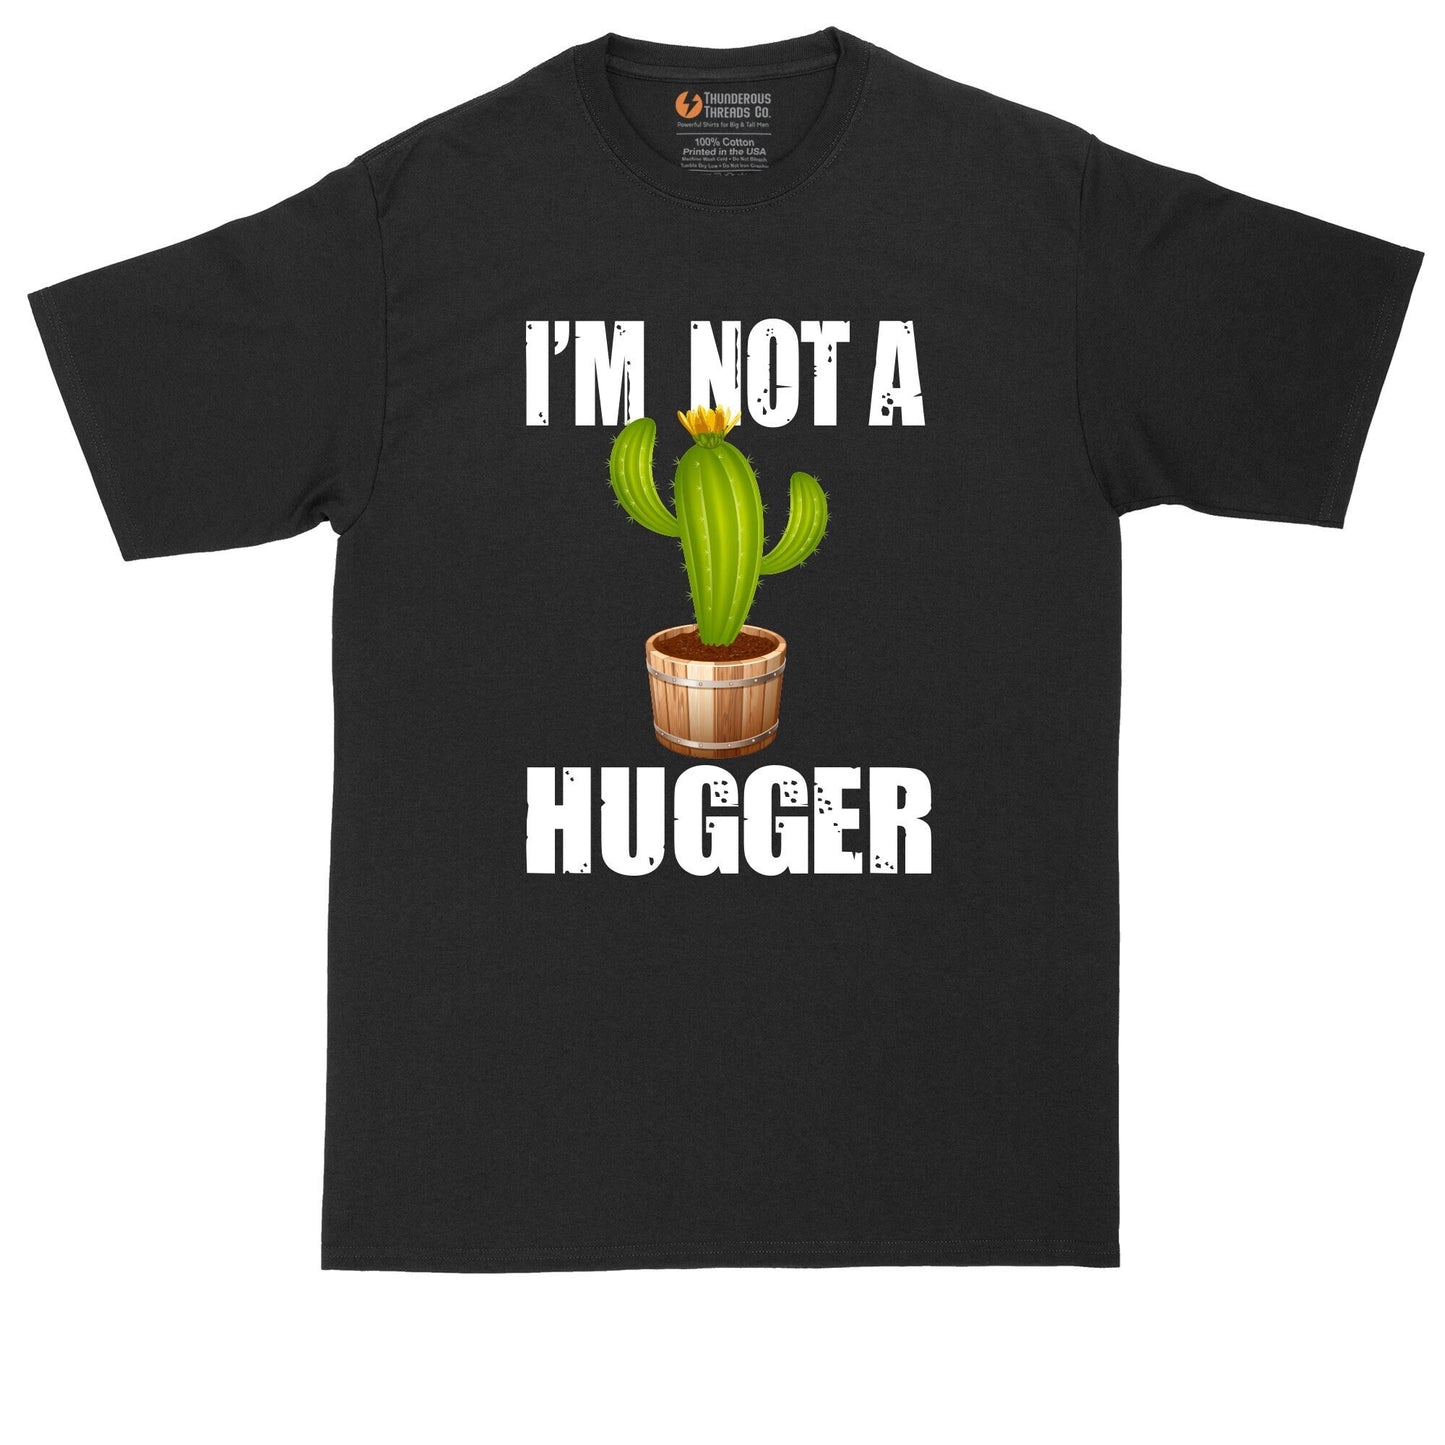 I'm Not a Hugger | Big and Tall Mens T-Shirt | Funny T-Shirt | Graphic T-Shirt